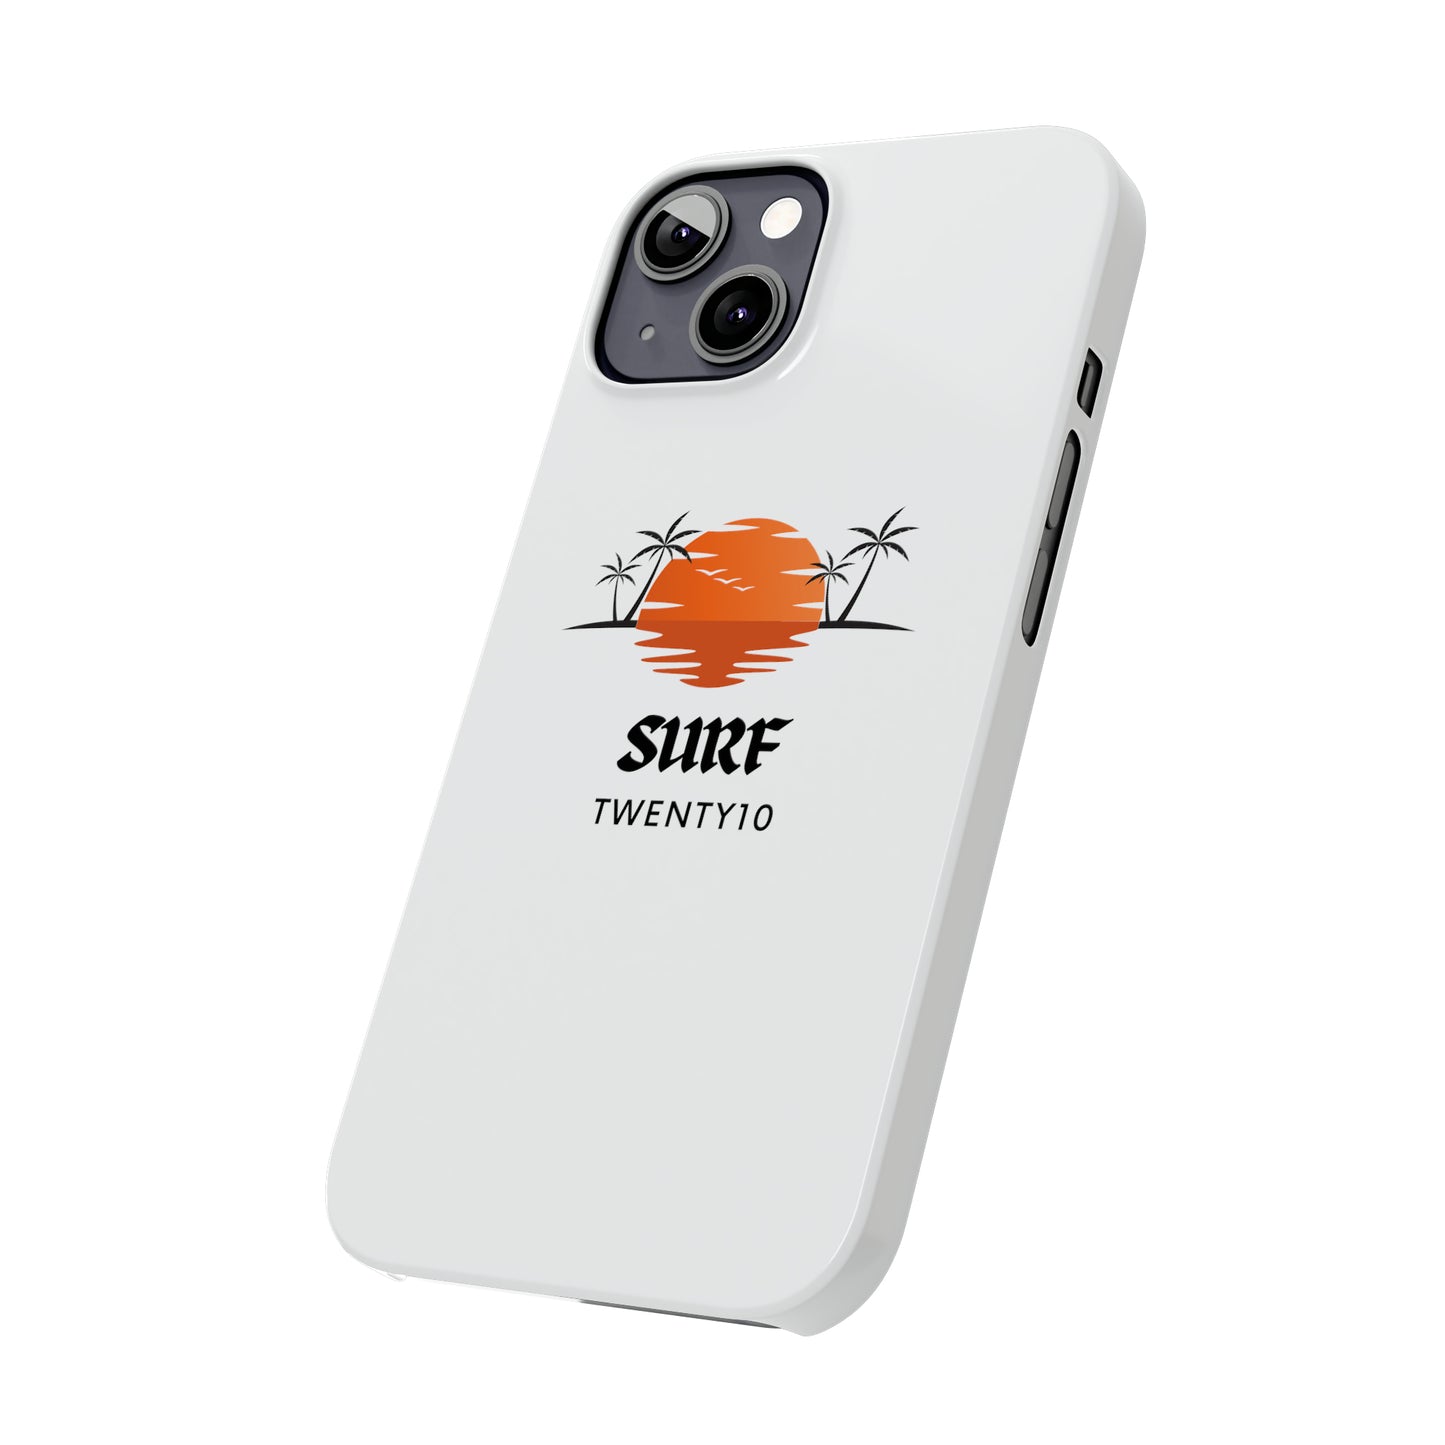 Sunset Surf Twenty10 Slim Phone Case